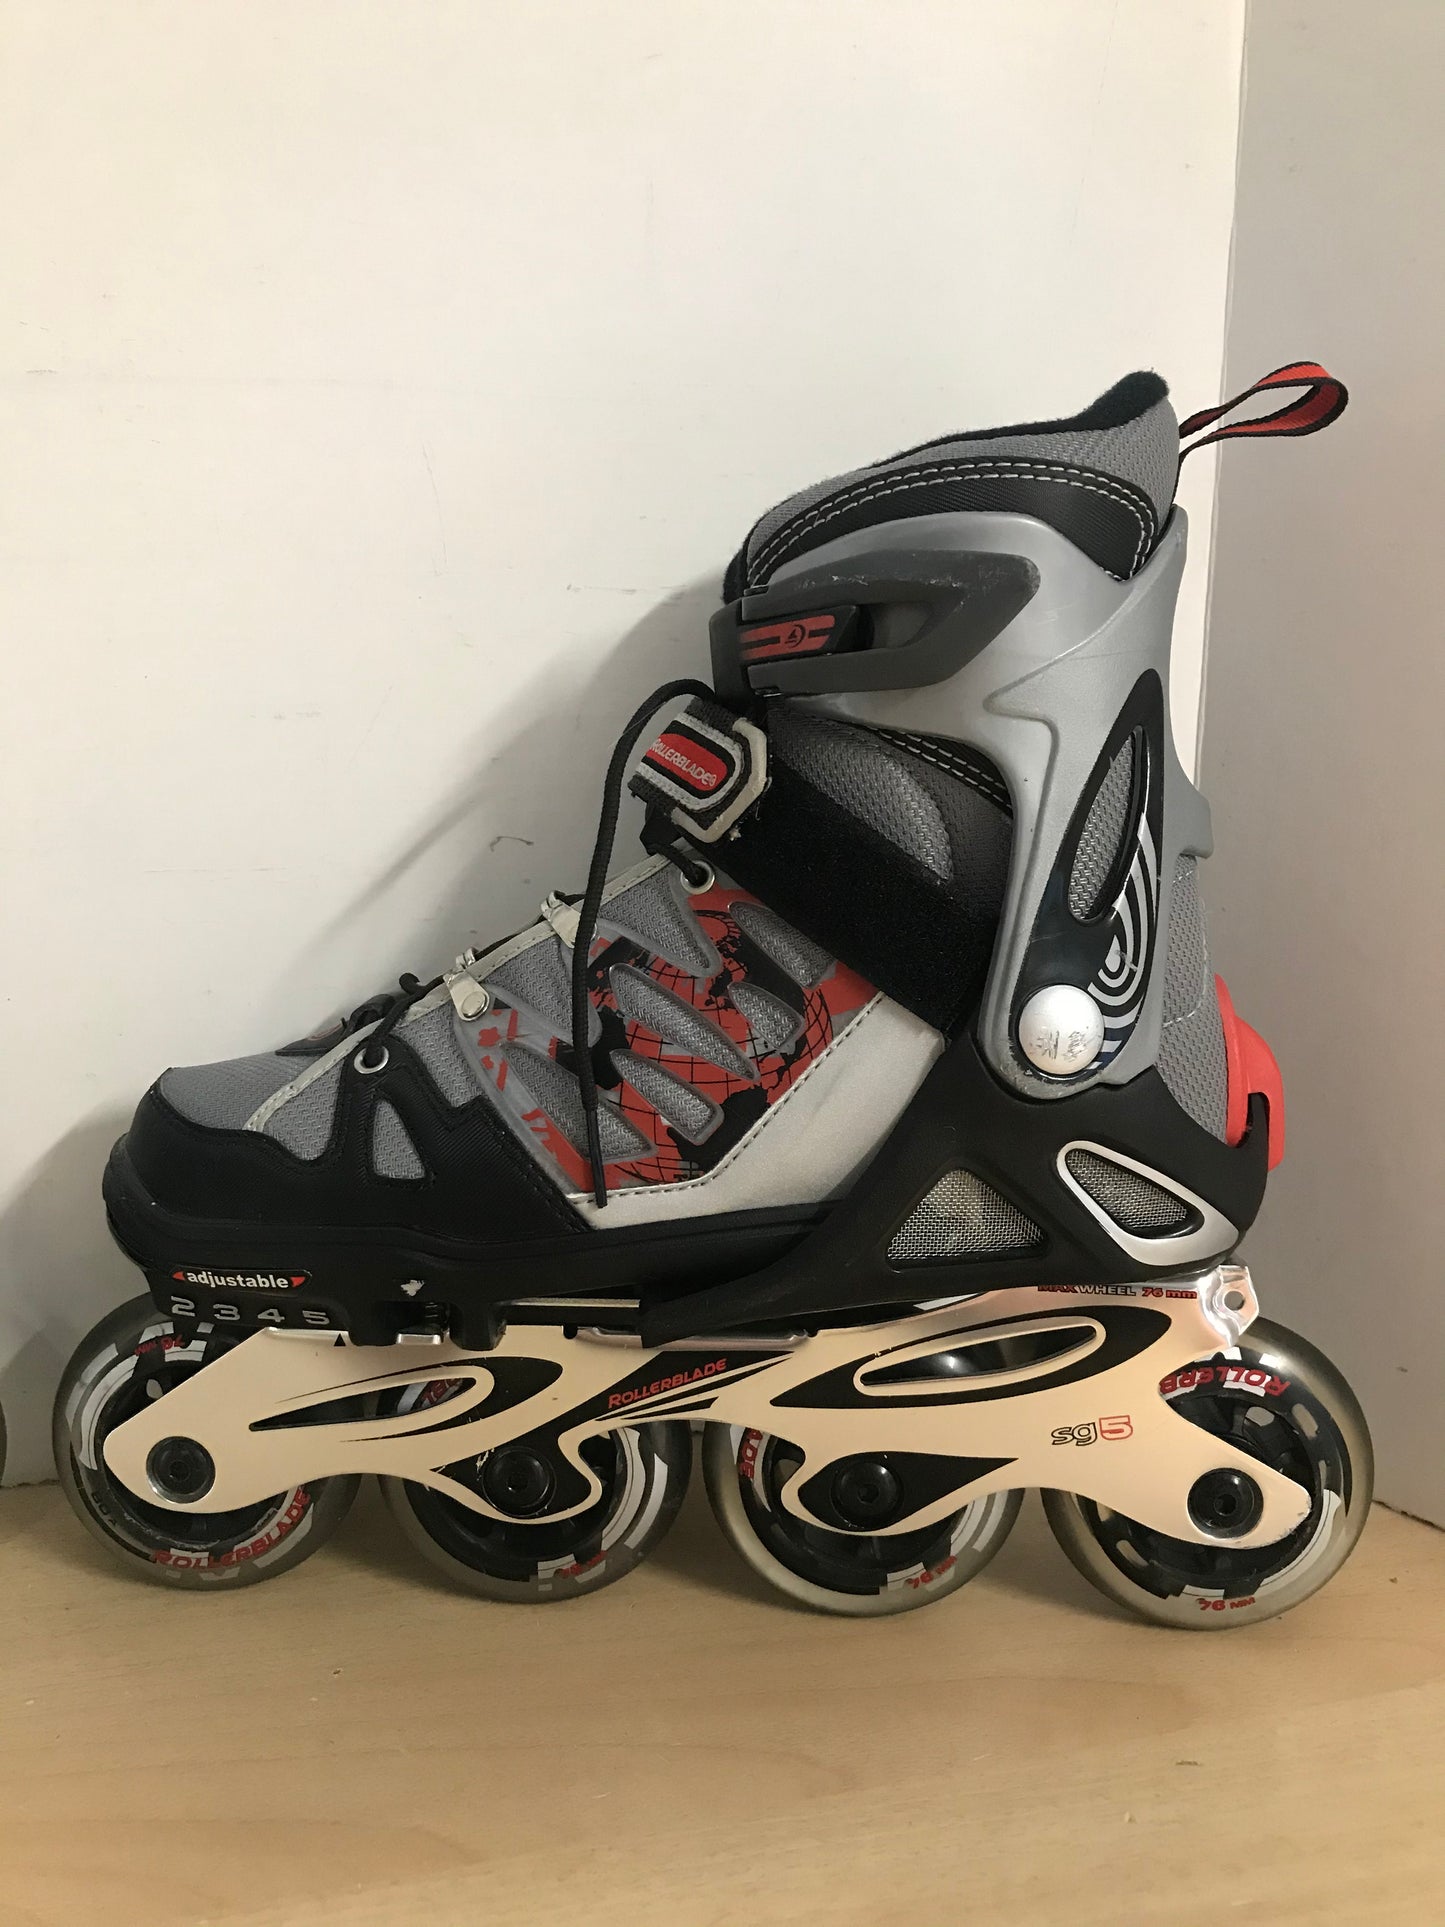 Inline Roller Skates Child Size 2-5 Adjustable Rollerblade Brand Black Grey Red Rubber Wheels Excellent